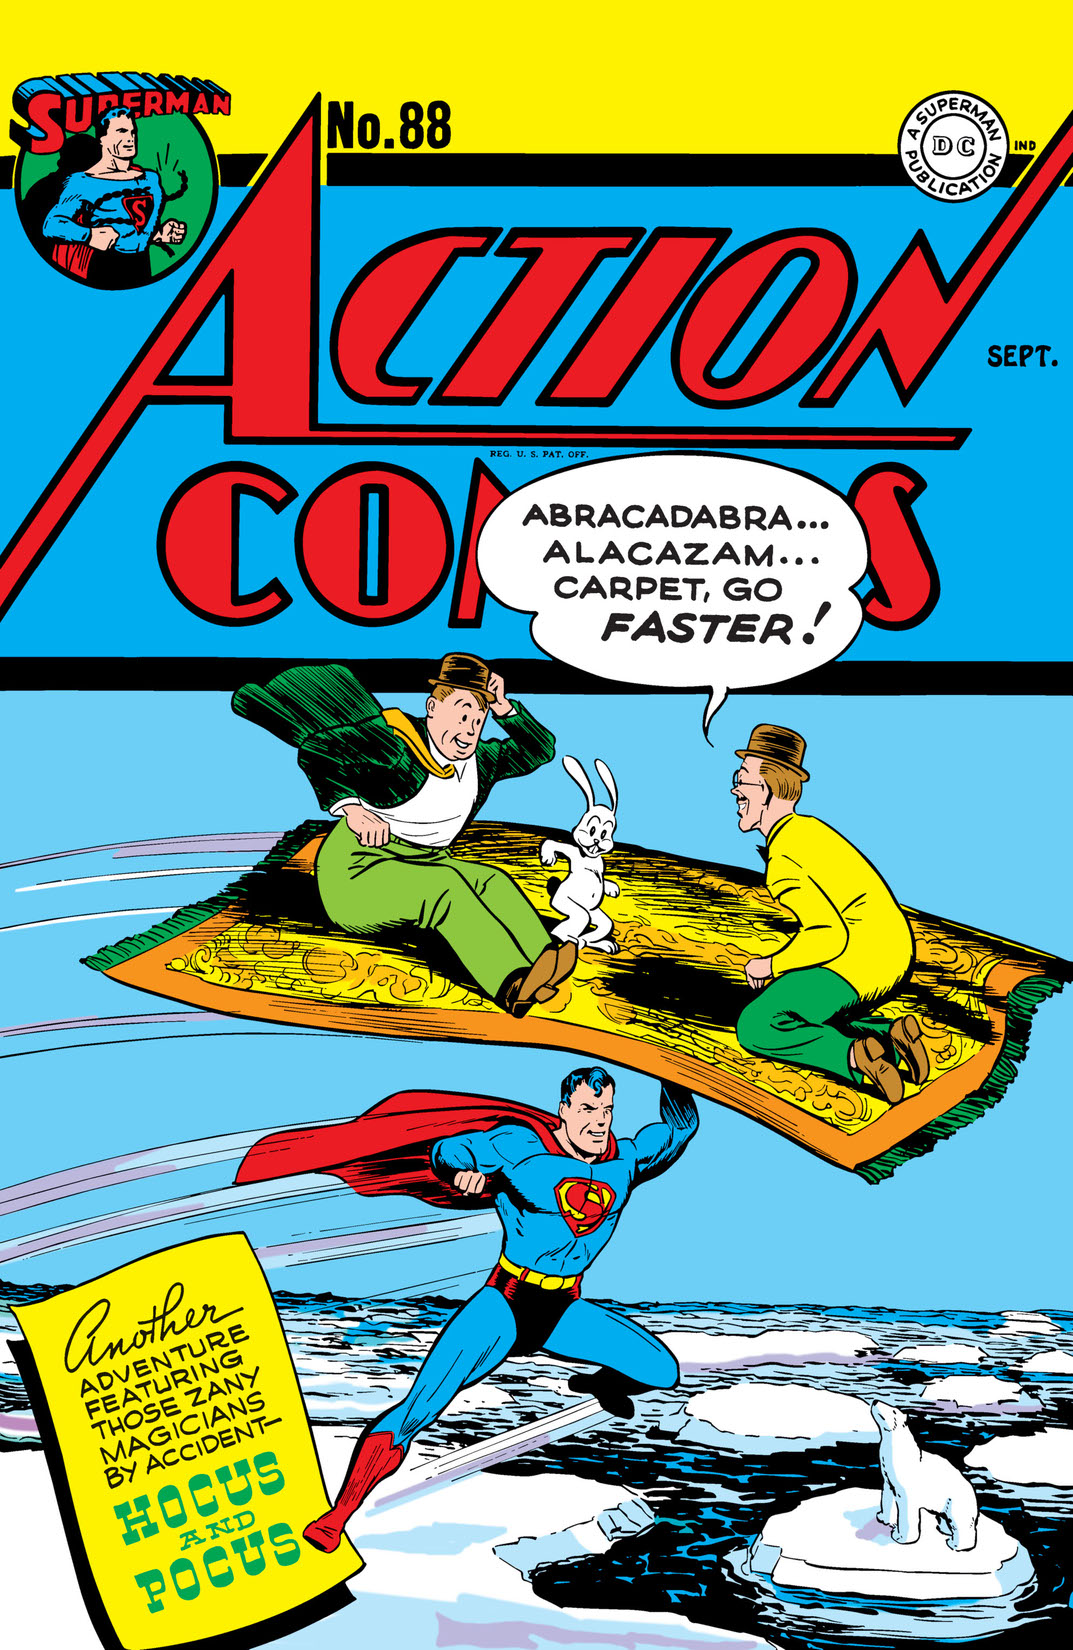 Action Comics (1938-) #88 preview images